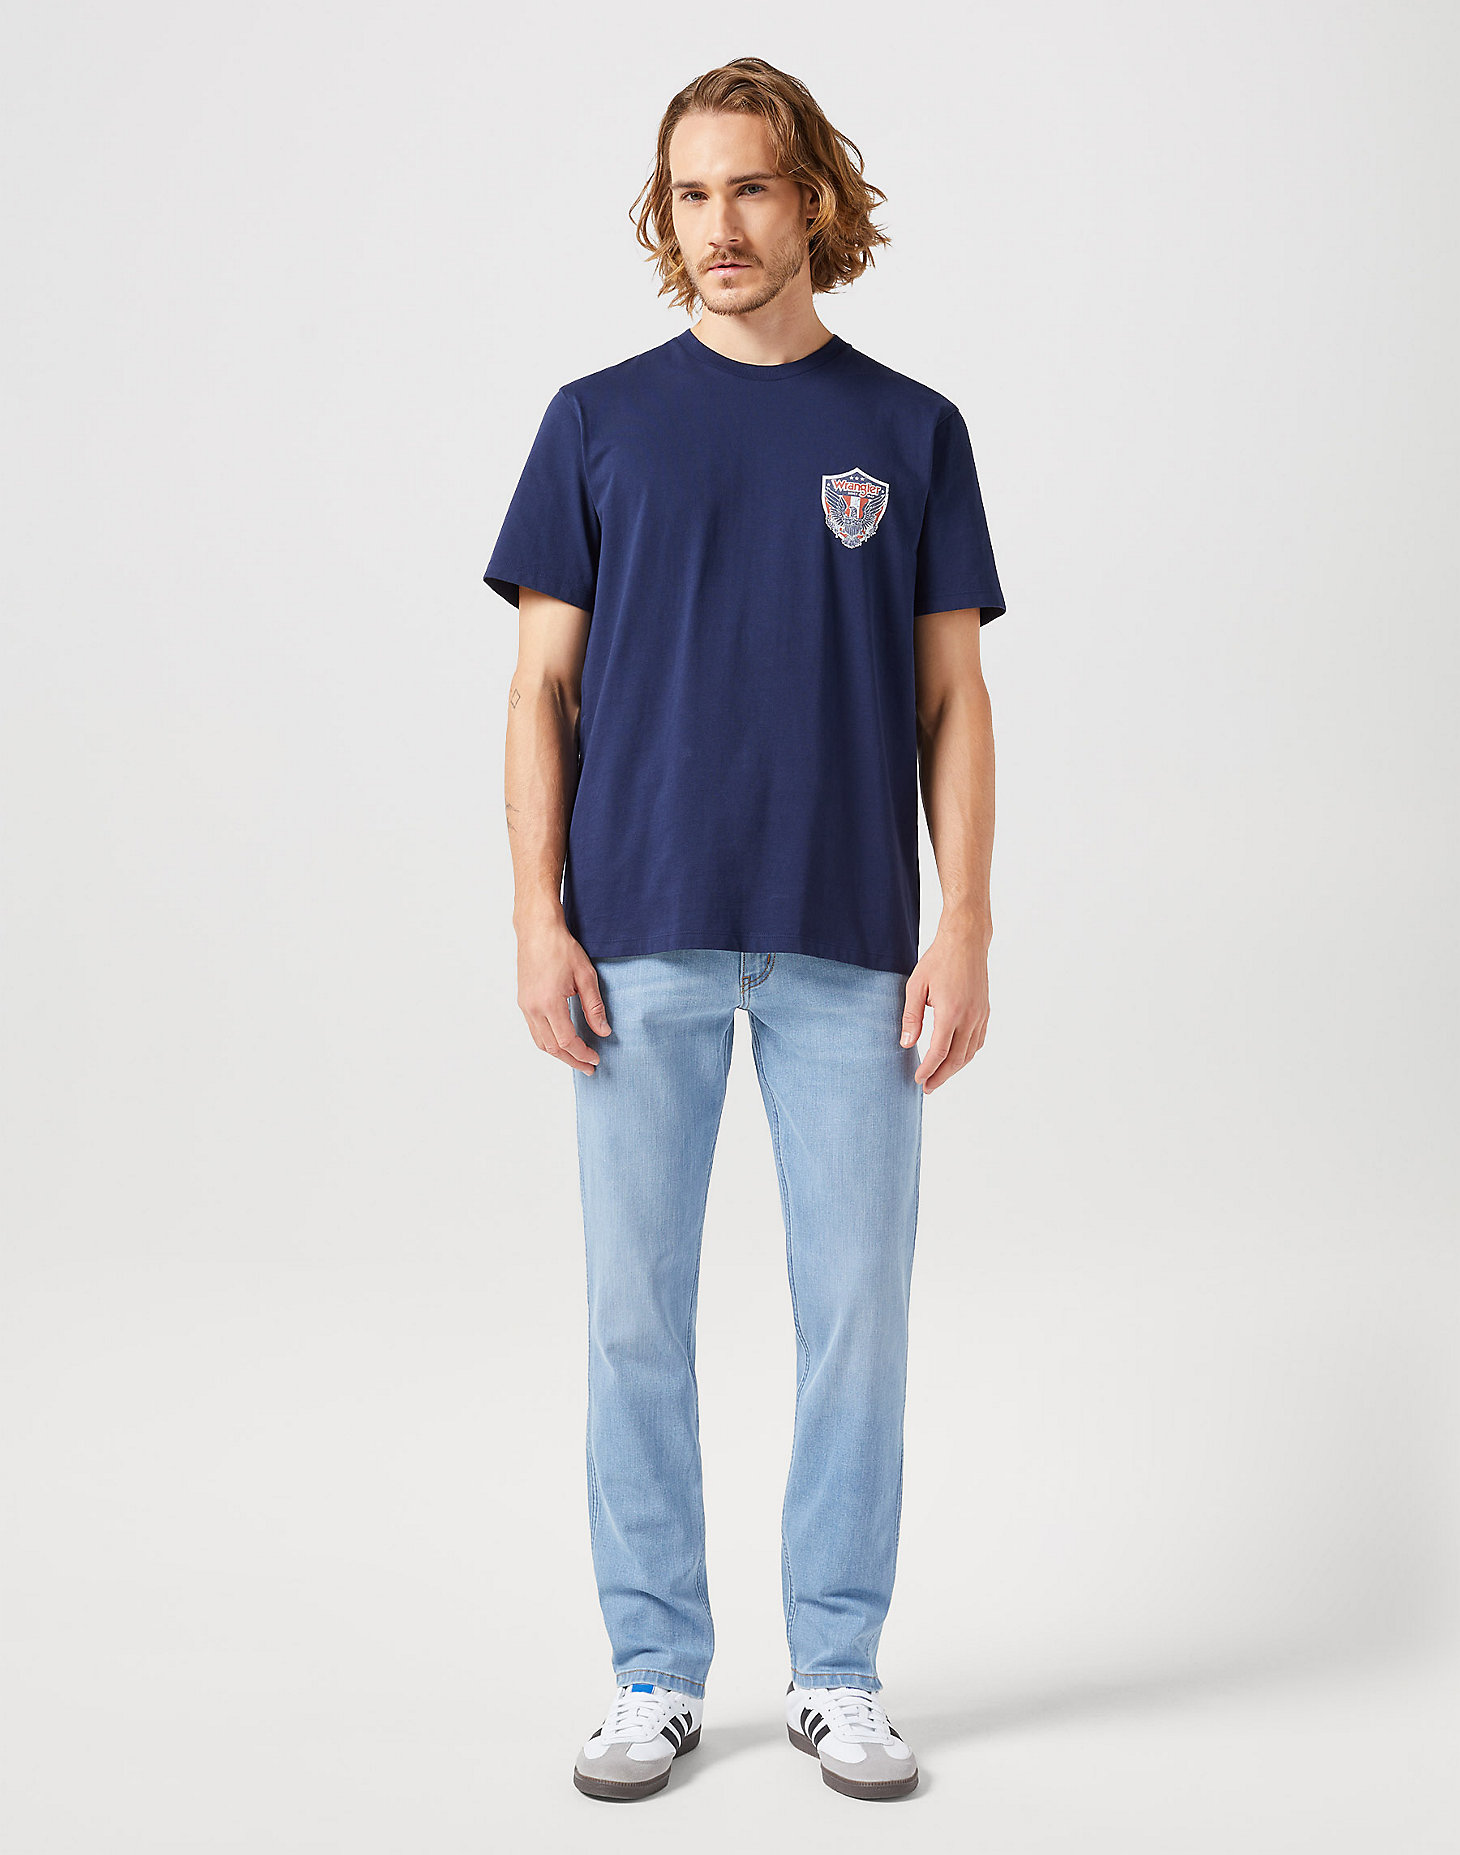 Wrangler pánské tričko 112350561 Modrá XL